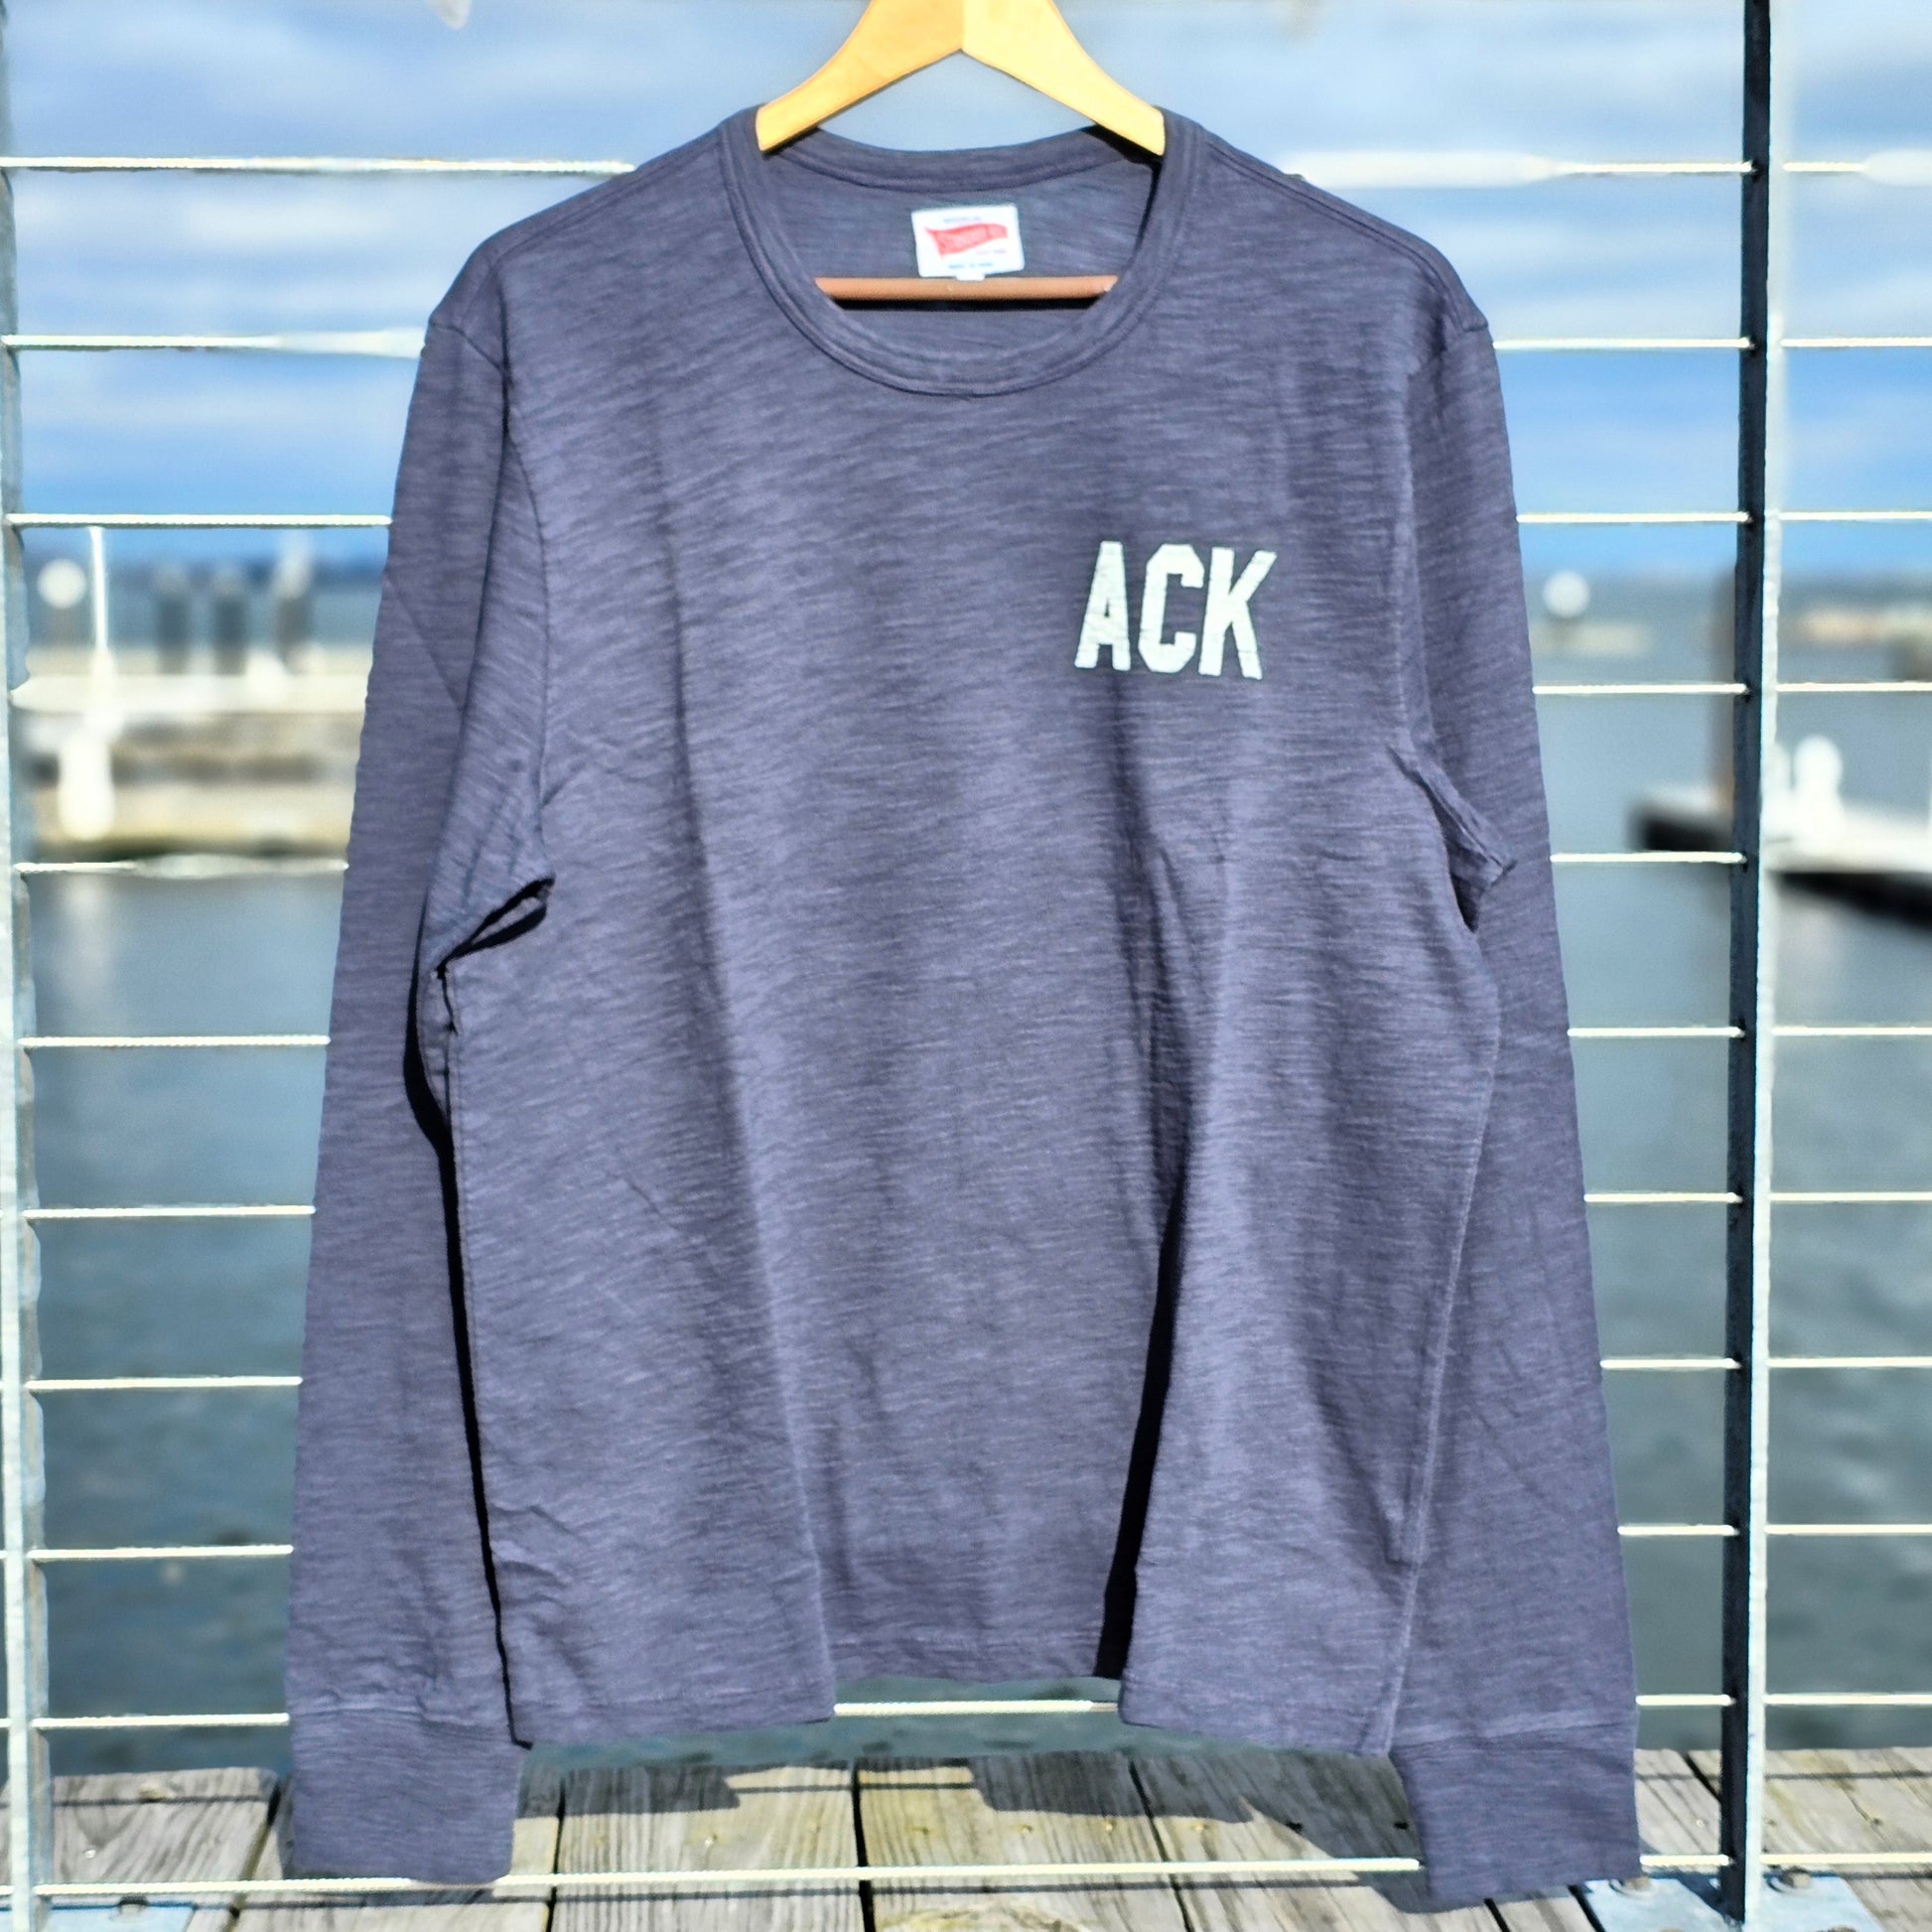 ack-longsleeve-shirt